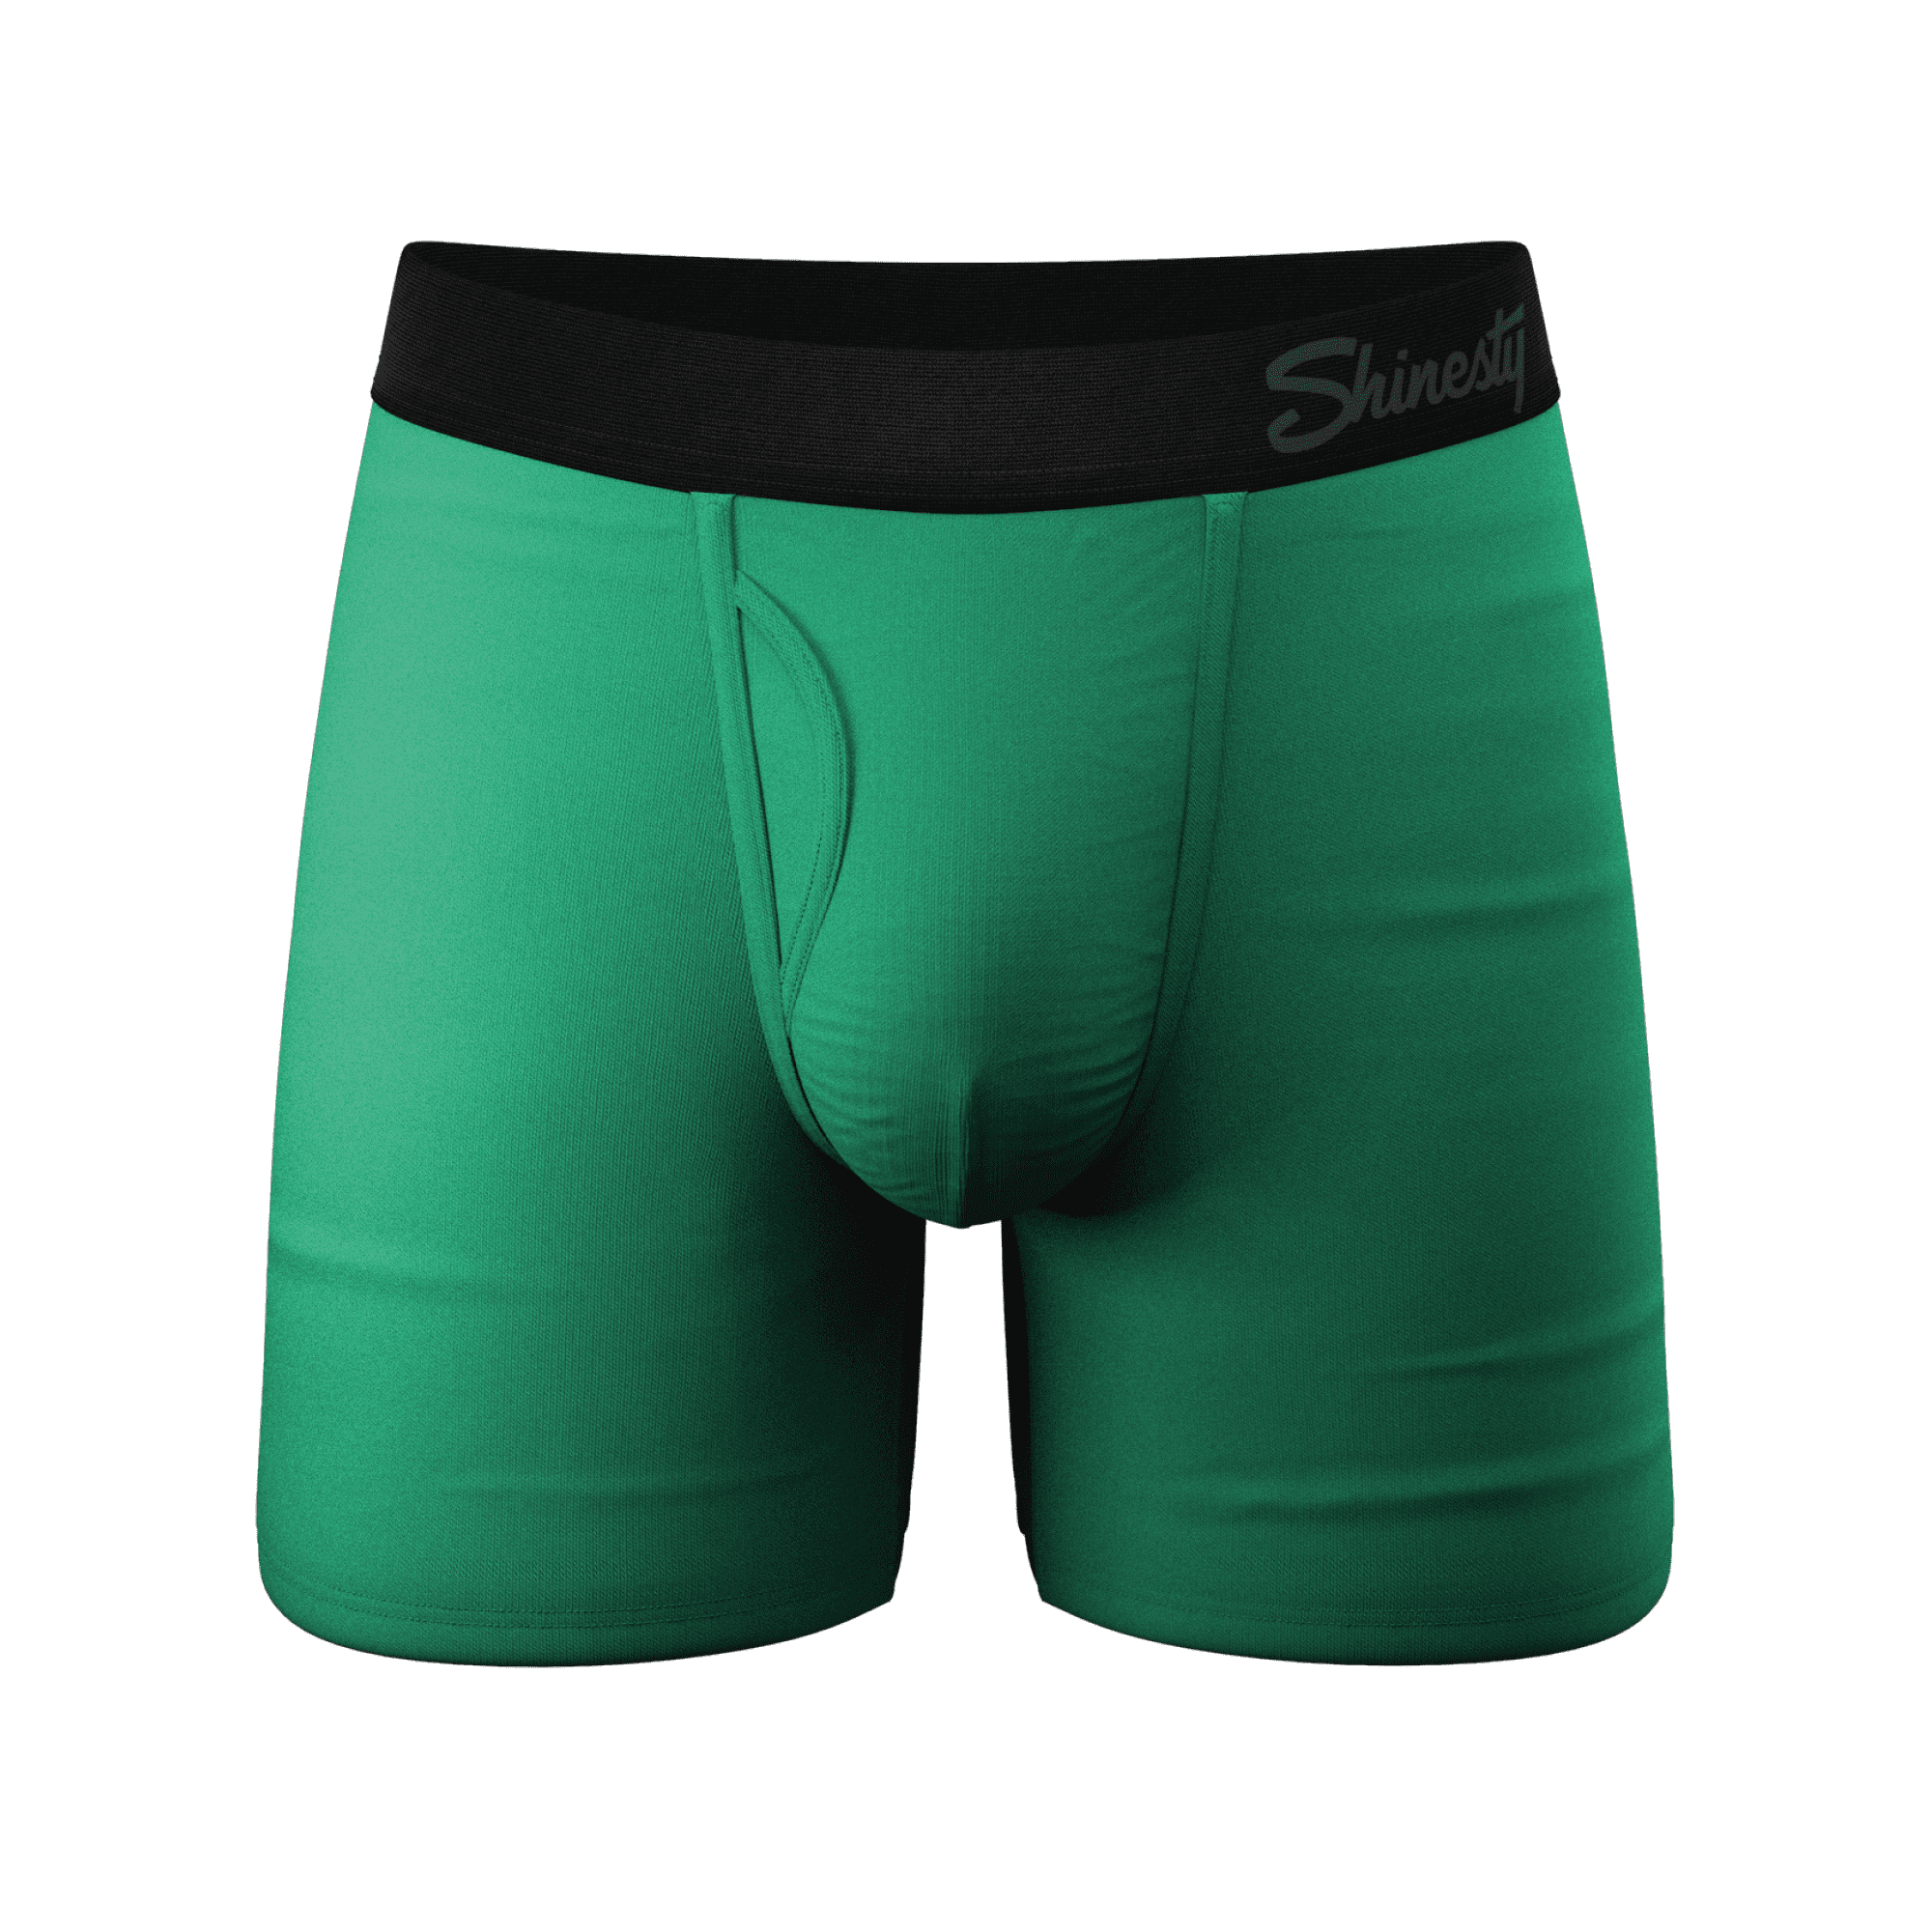 The Green Boys - Shinesty Men's Green Ball Hammock Pouch Underwear